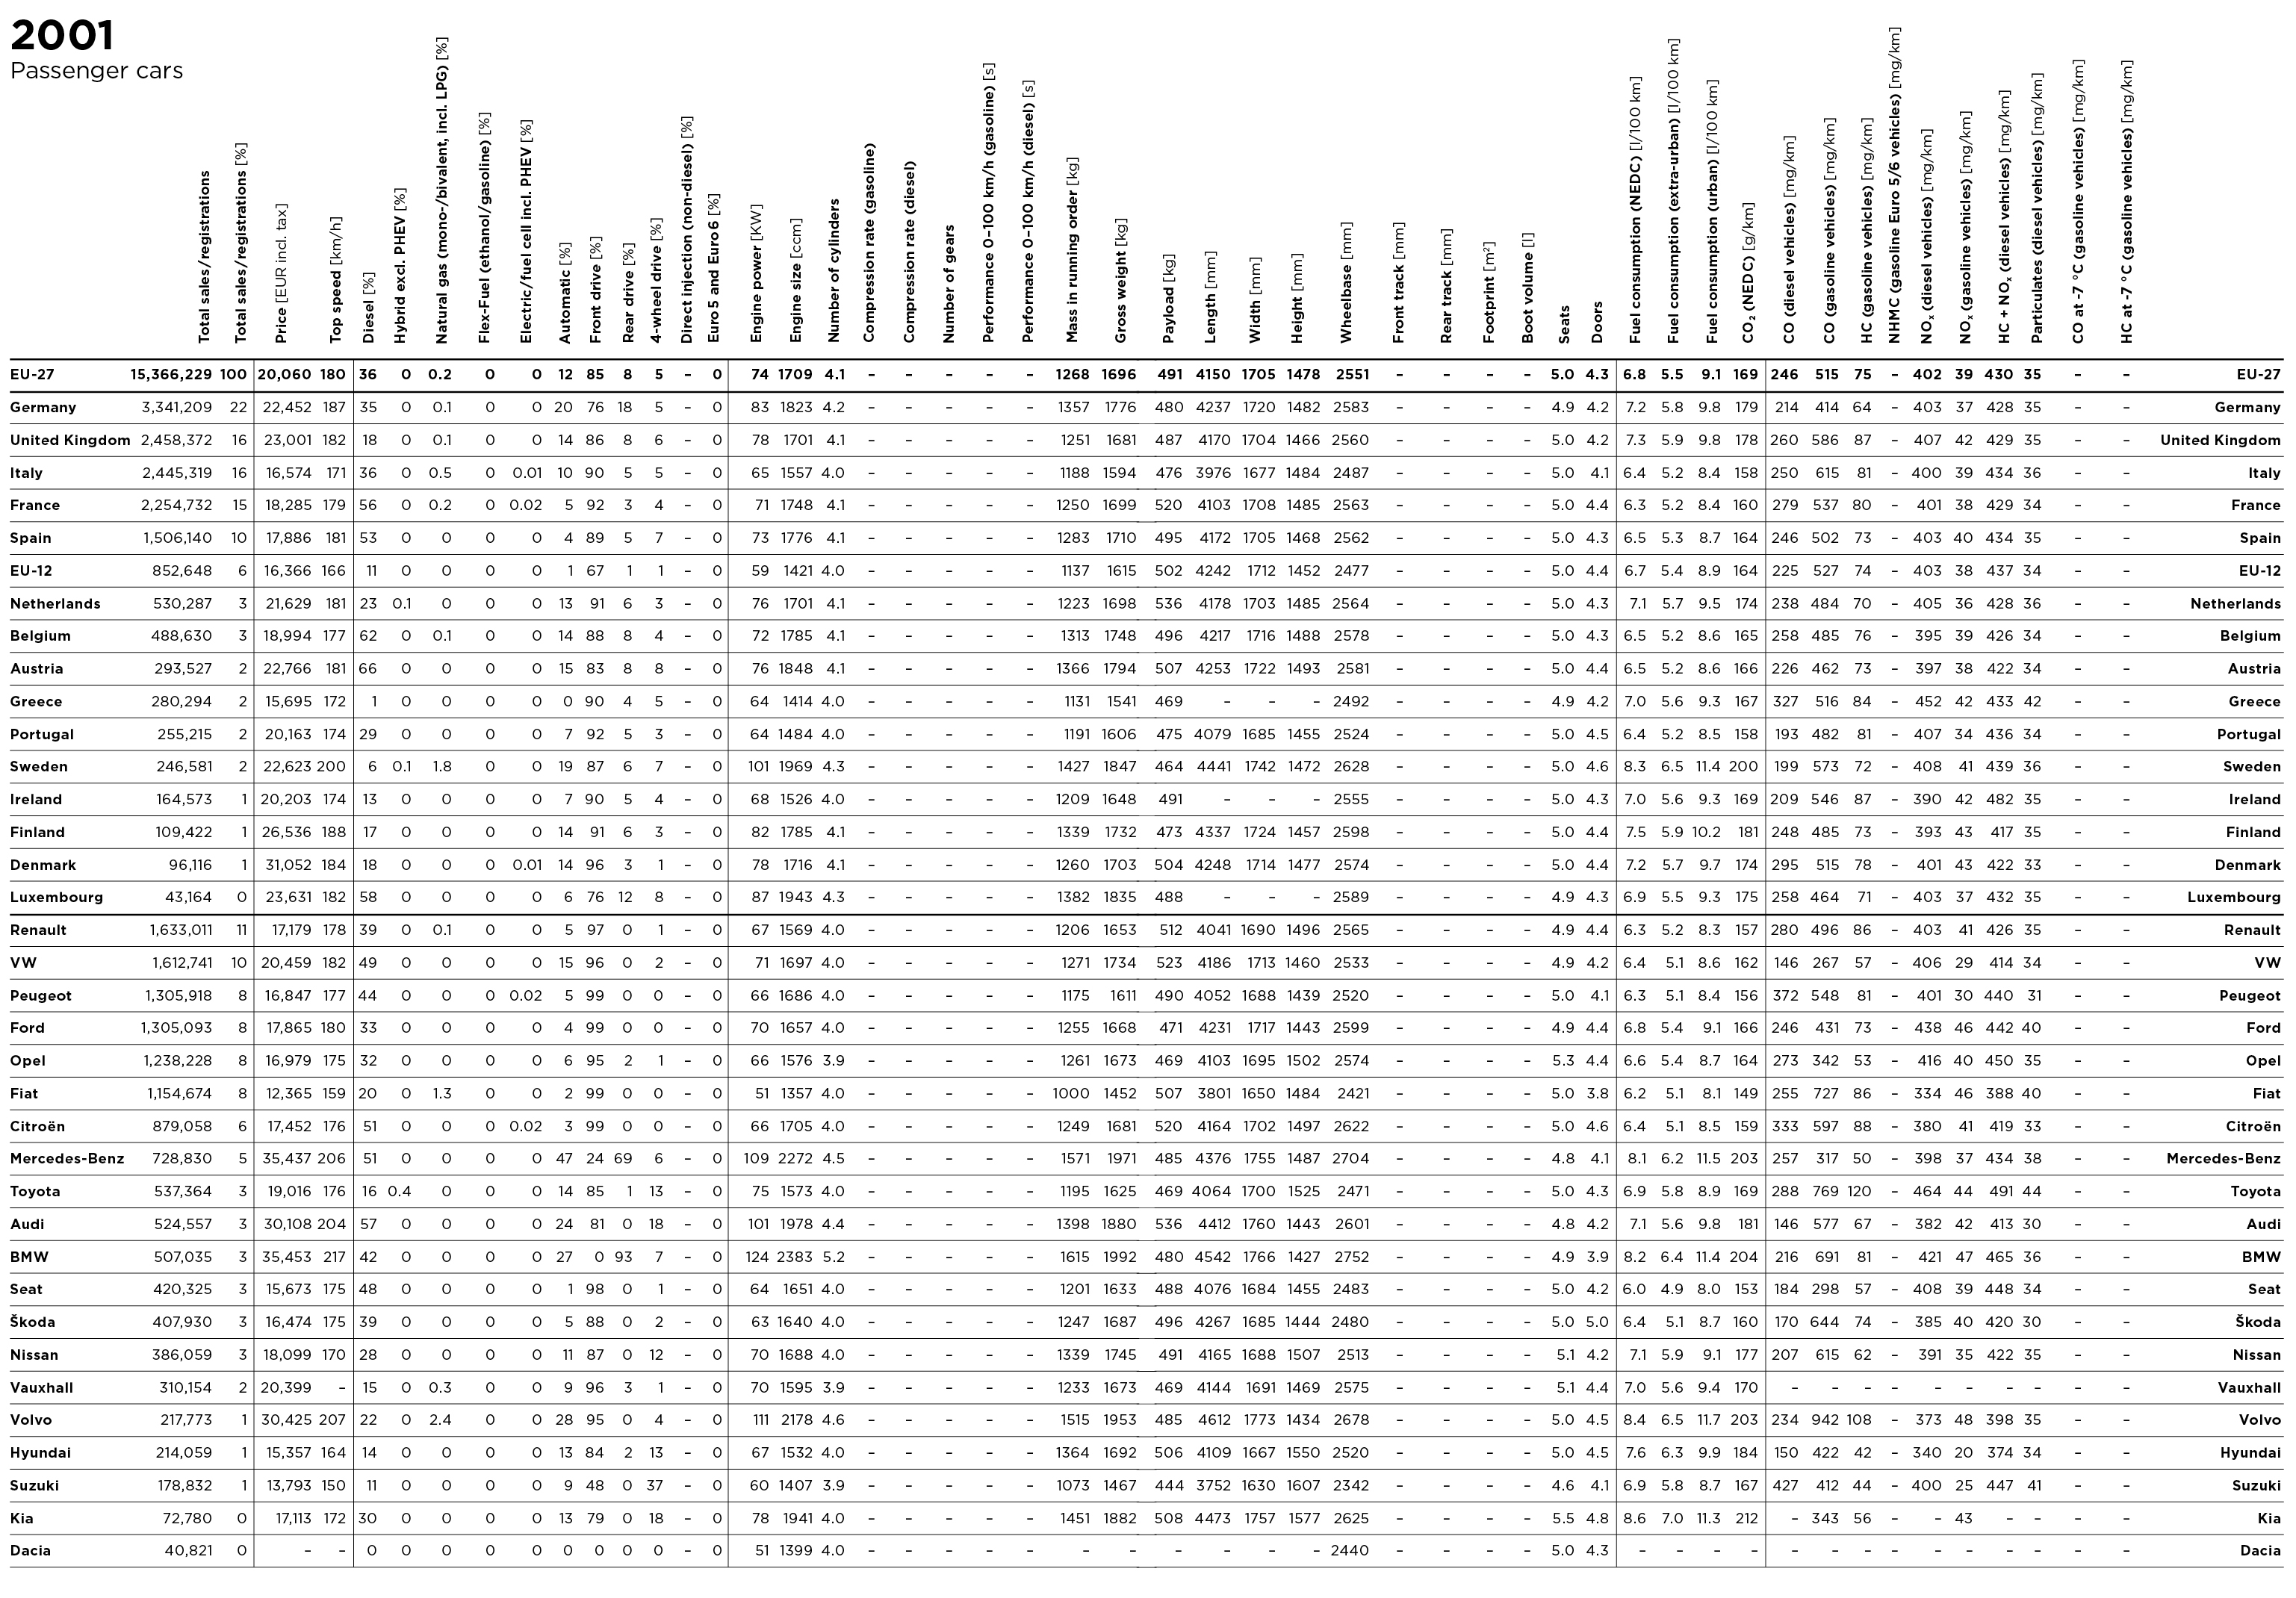 PC 2001 data